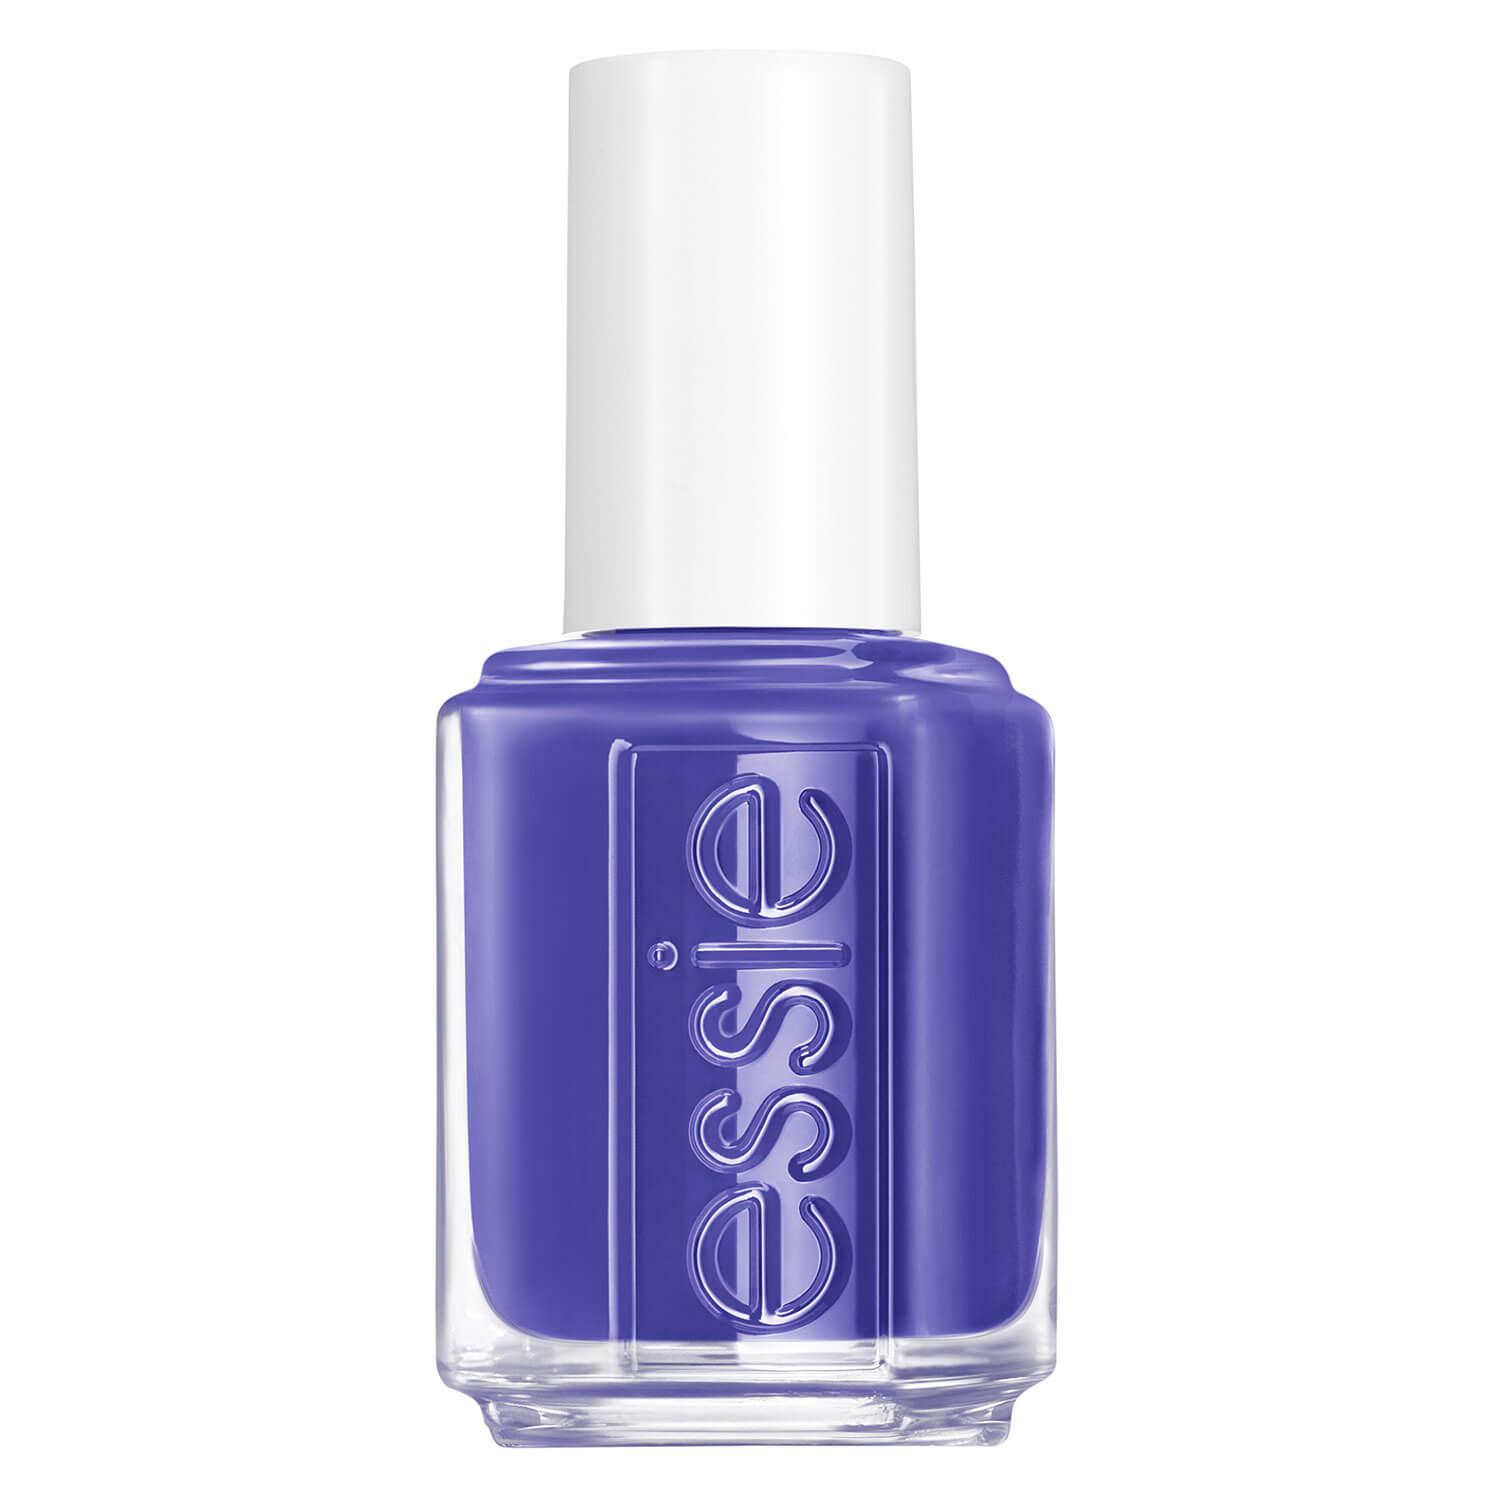 essie nail polish - wink of slepp 752